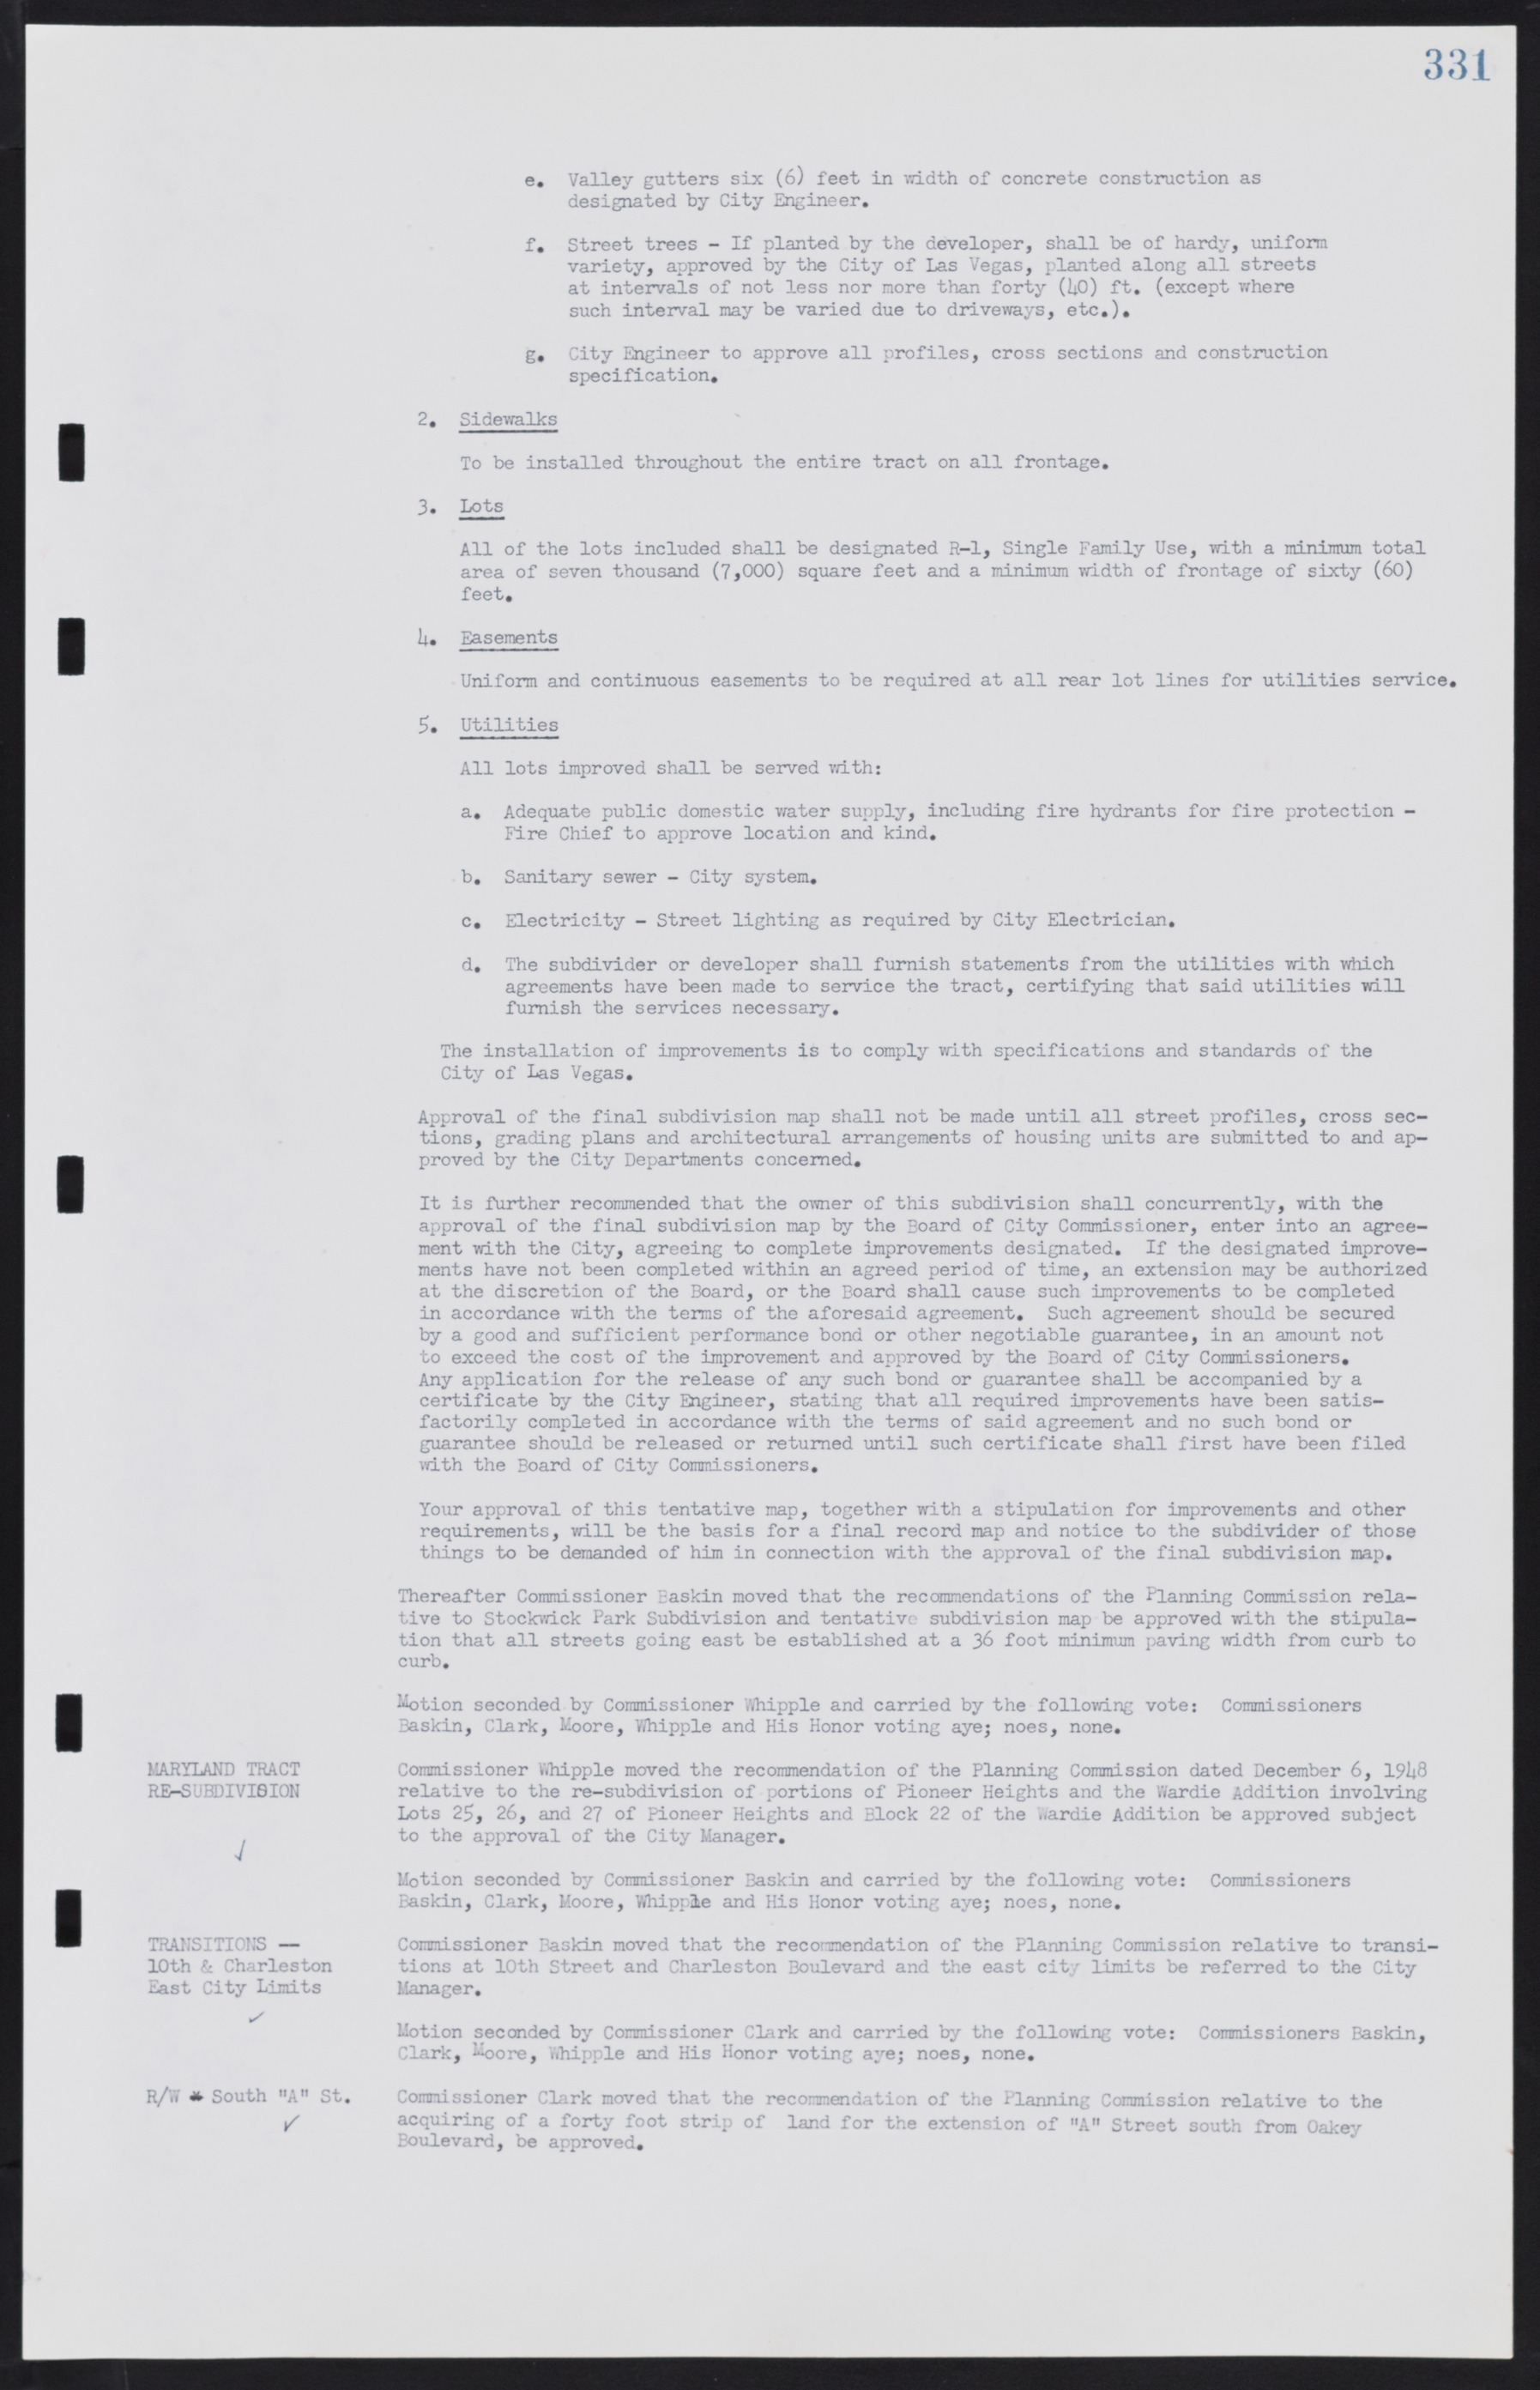 Las Vegas City Commission Minutes, January 7, 1947 to October 26, 1949, lvc000006-355